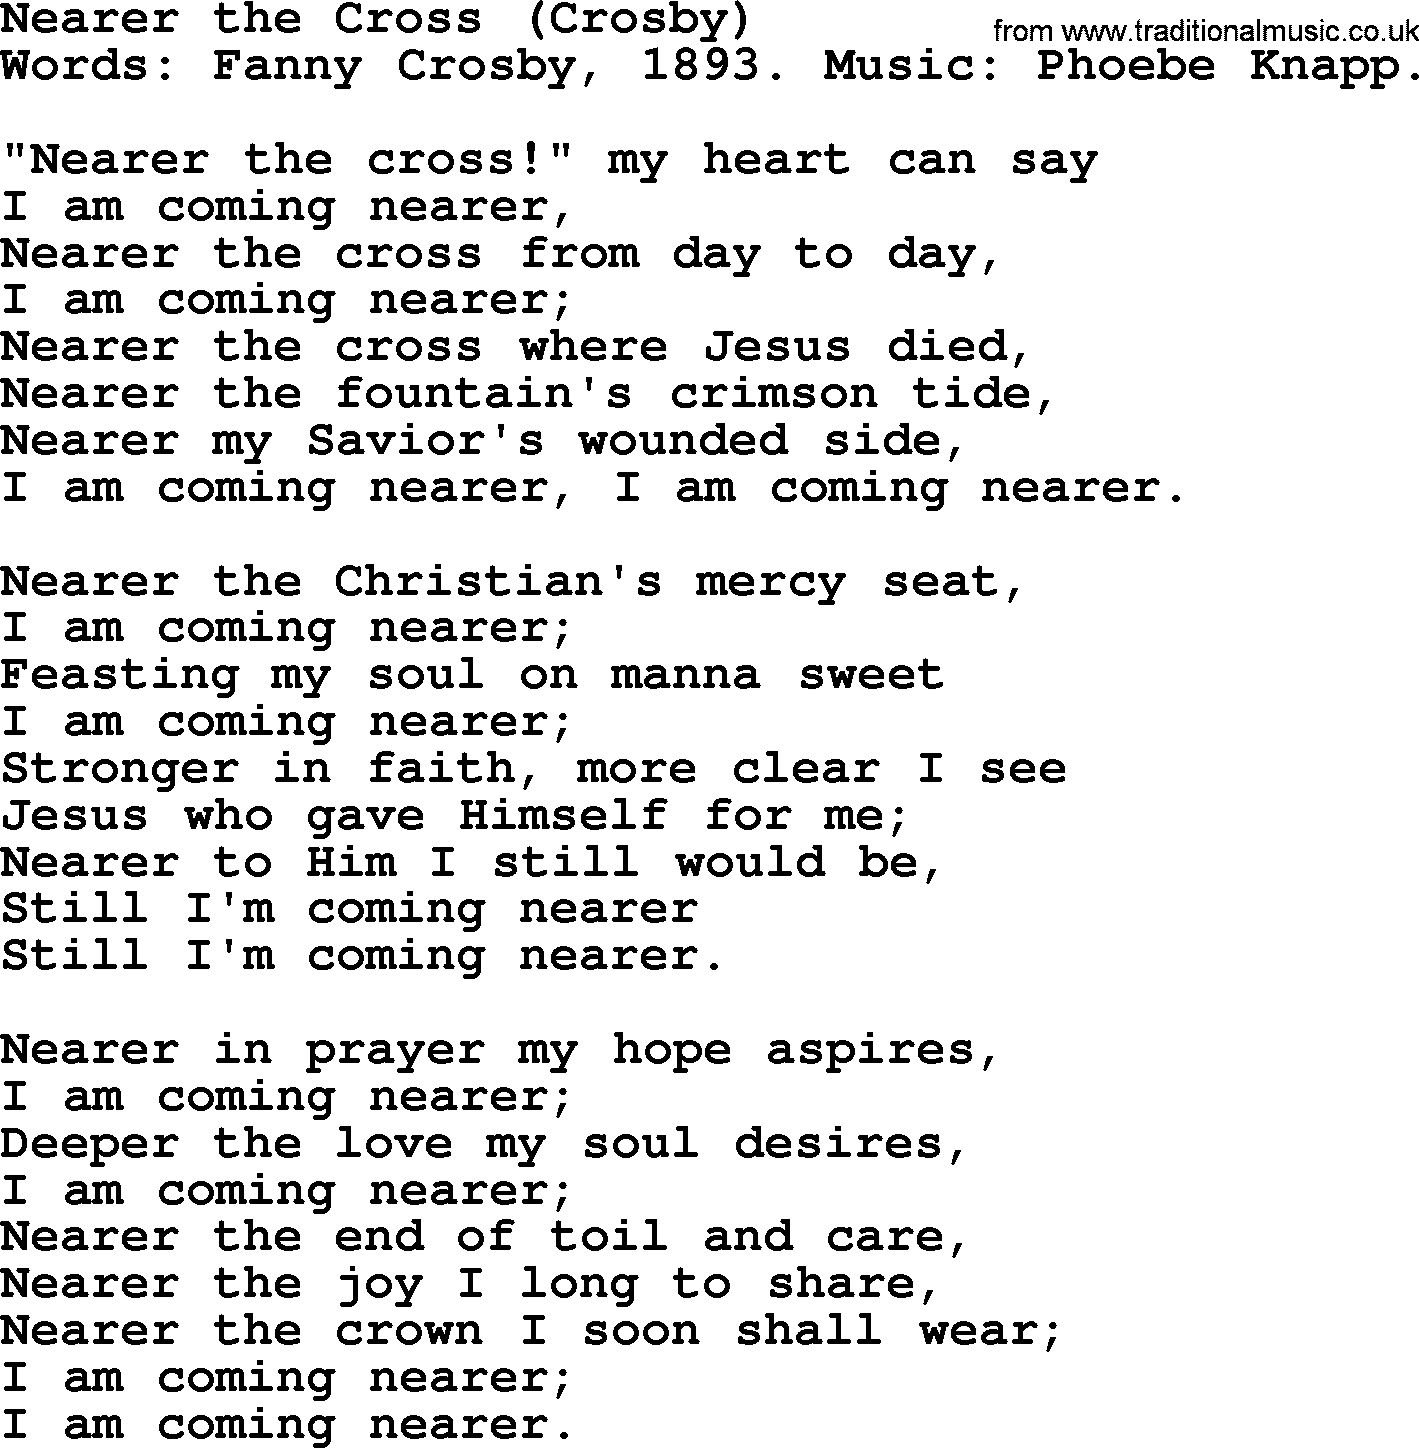 Fanny Crosby song: Nearer The Cross, lyrics